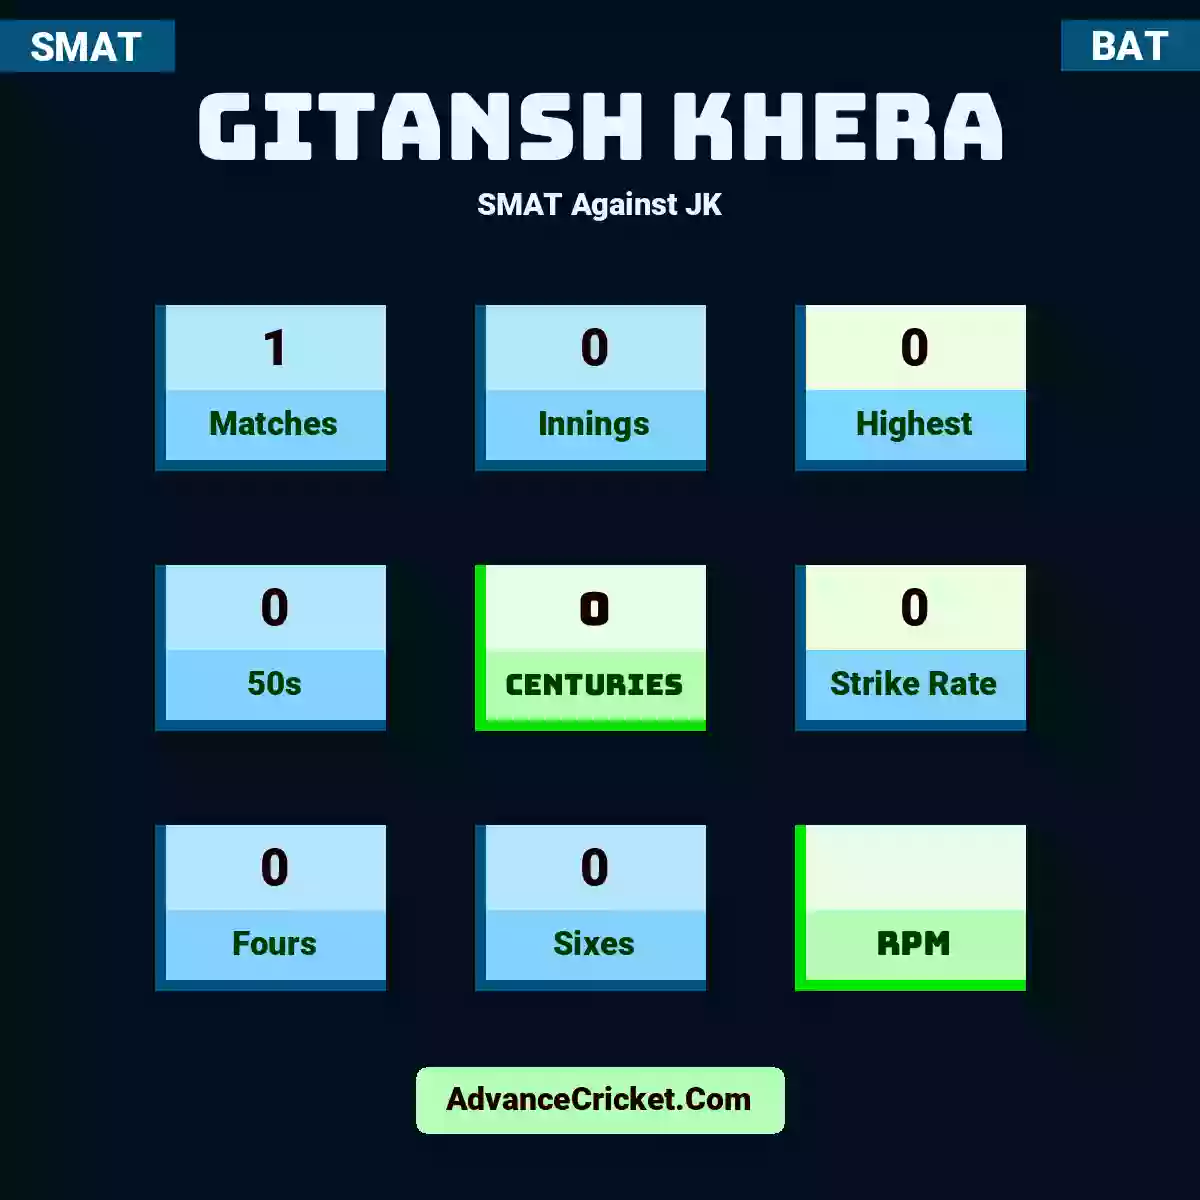 Gitansh Khera SMAT  Against JK, Gitansh Khera played 1 matches, scored 0 runs as highest, 0 half-centuries, and 0 centuries, with a strike rate of 0. G.Khera hit 0 fours and 0 sixes.